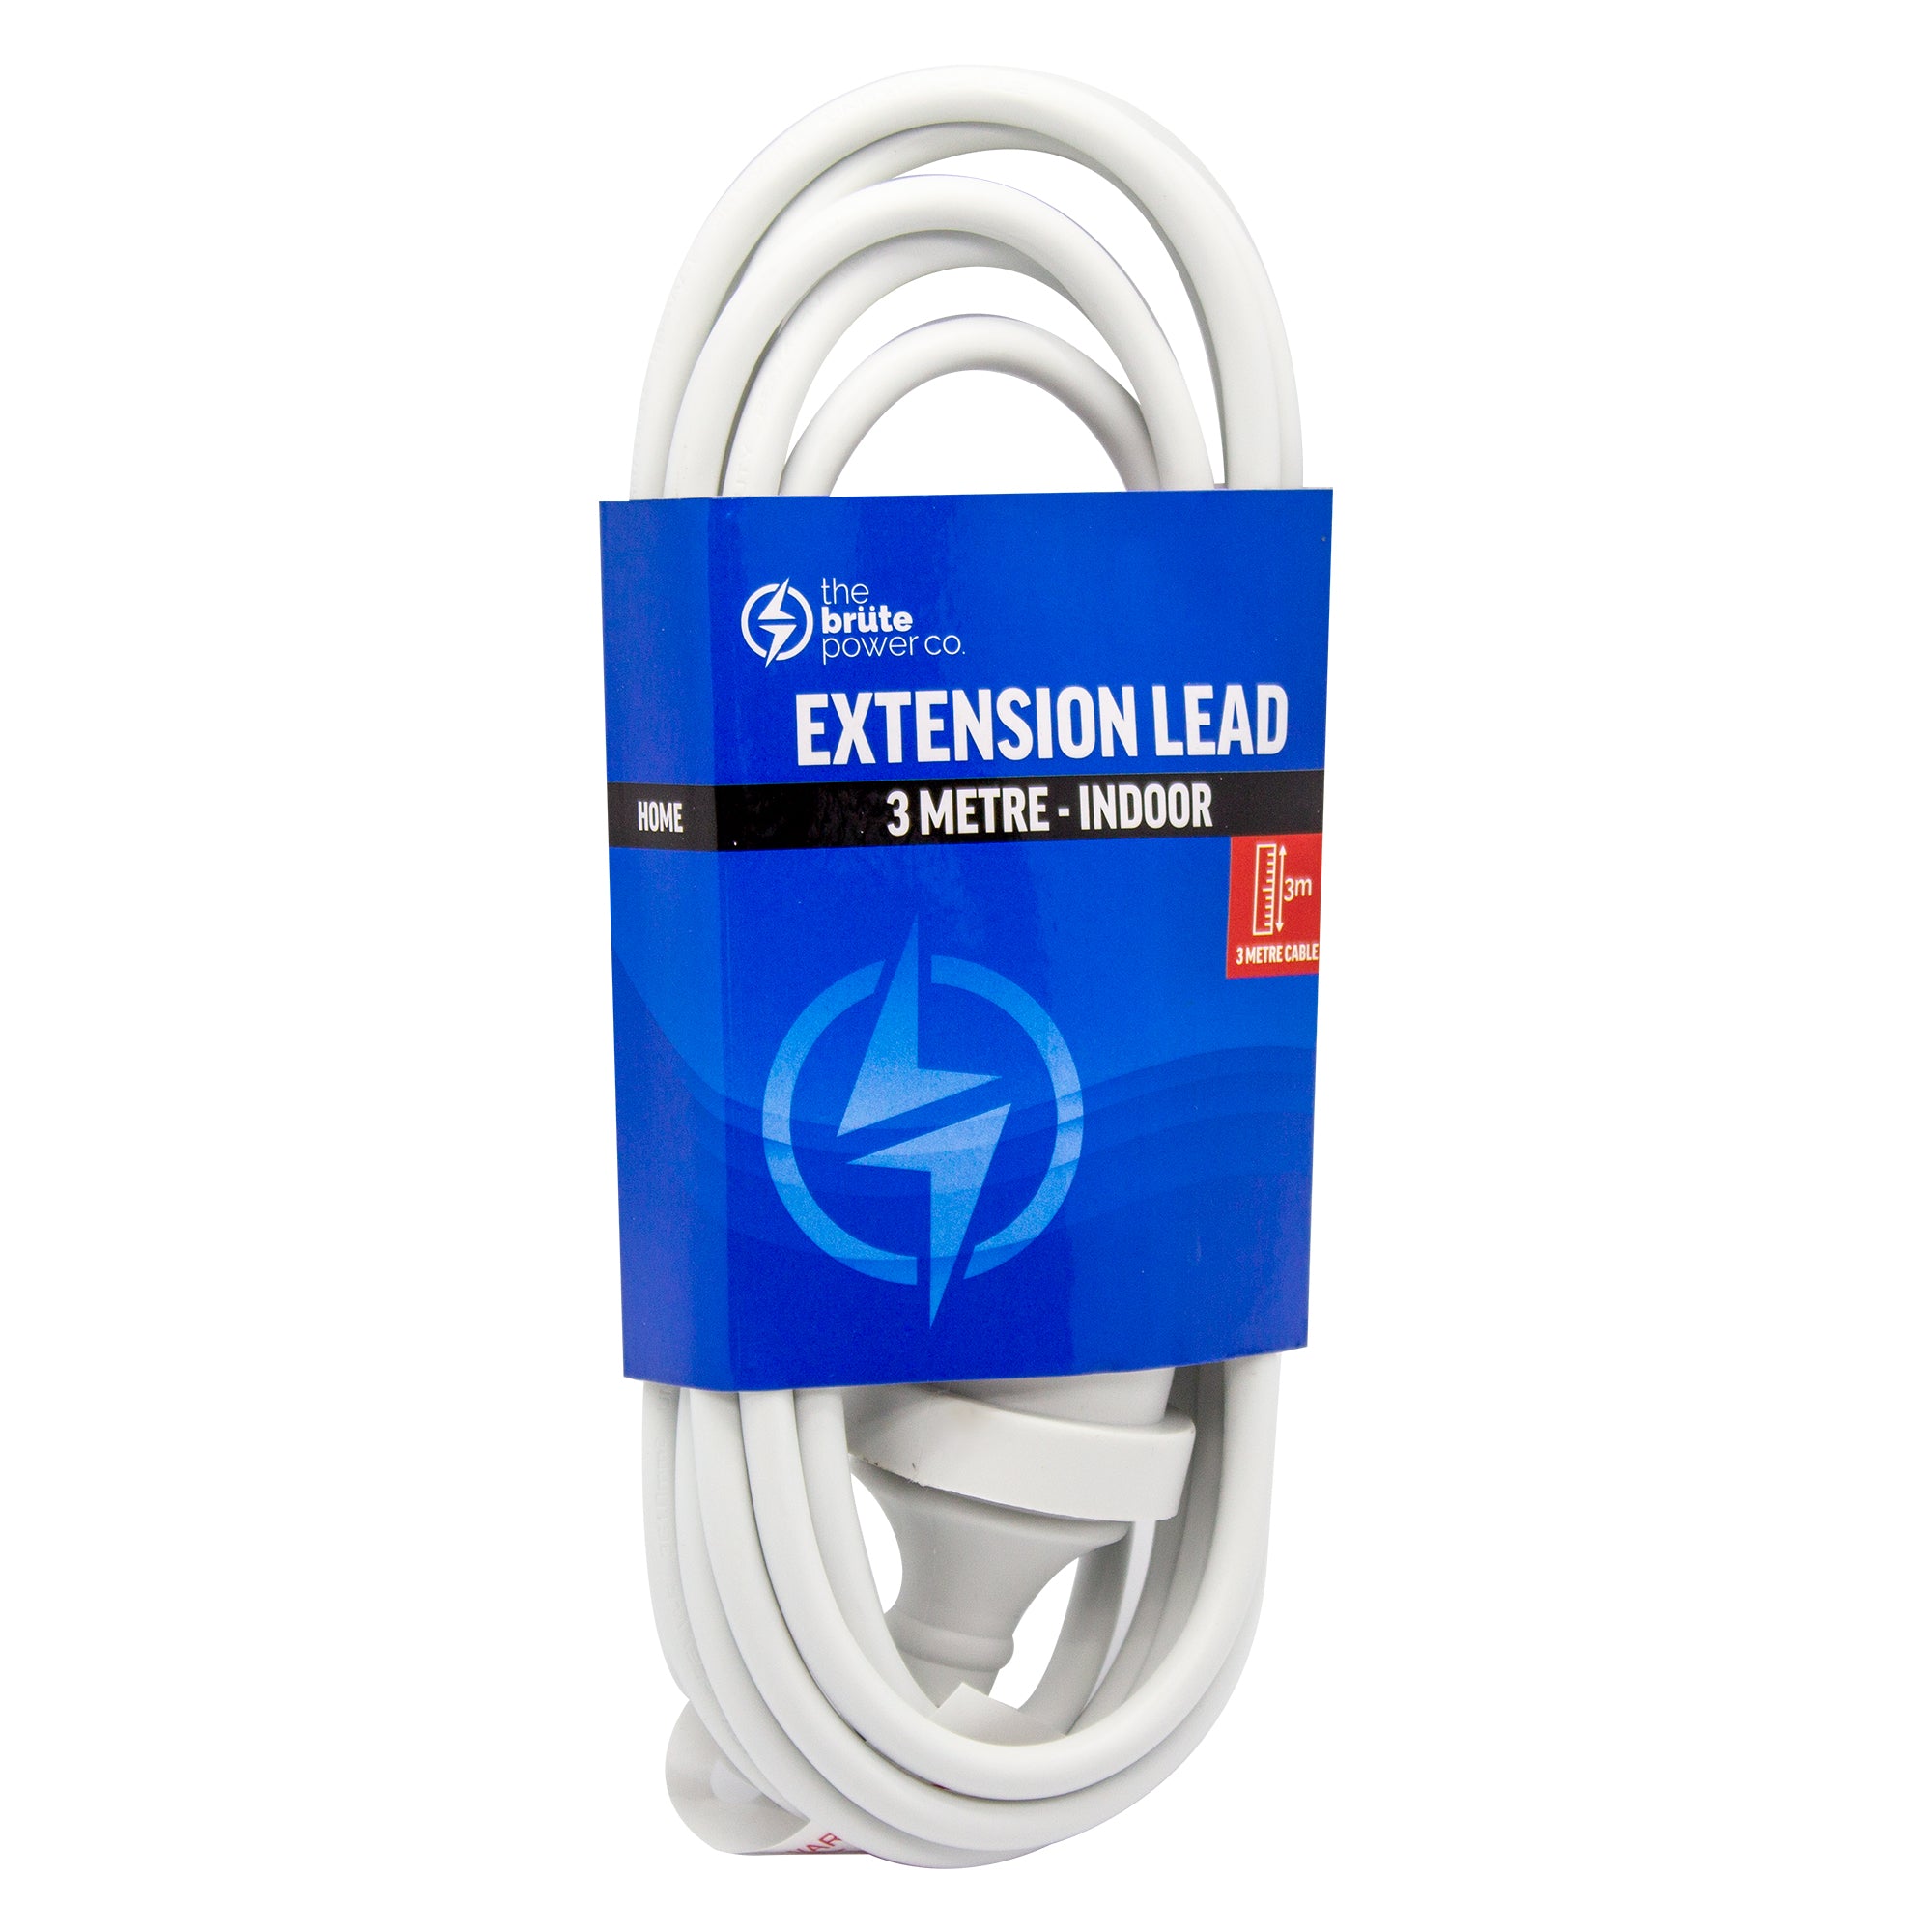 Extension Lead - 3 Metre